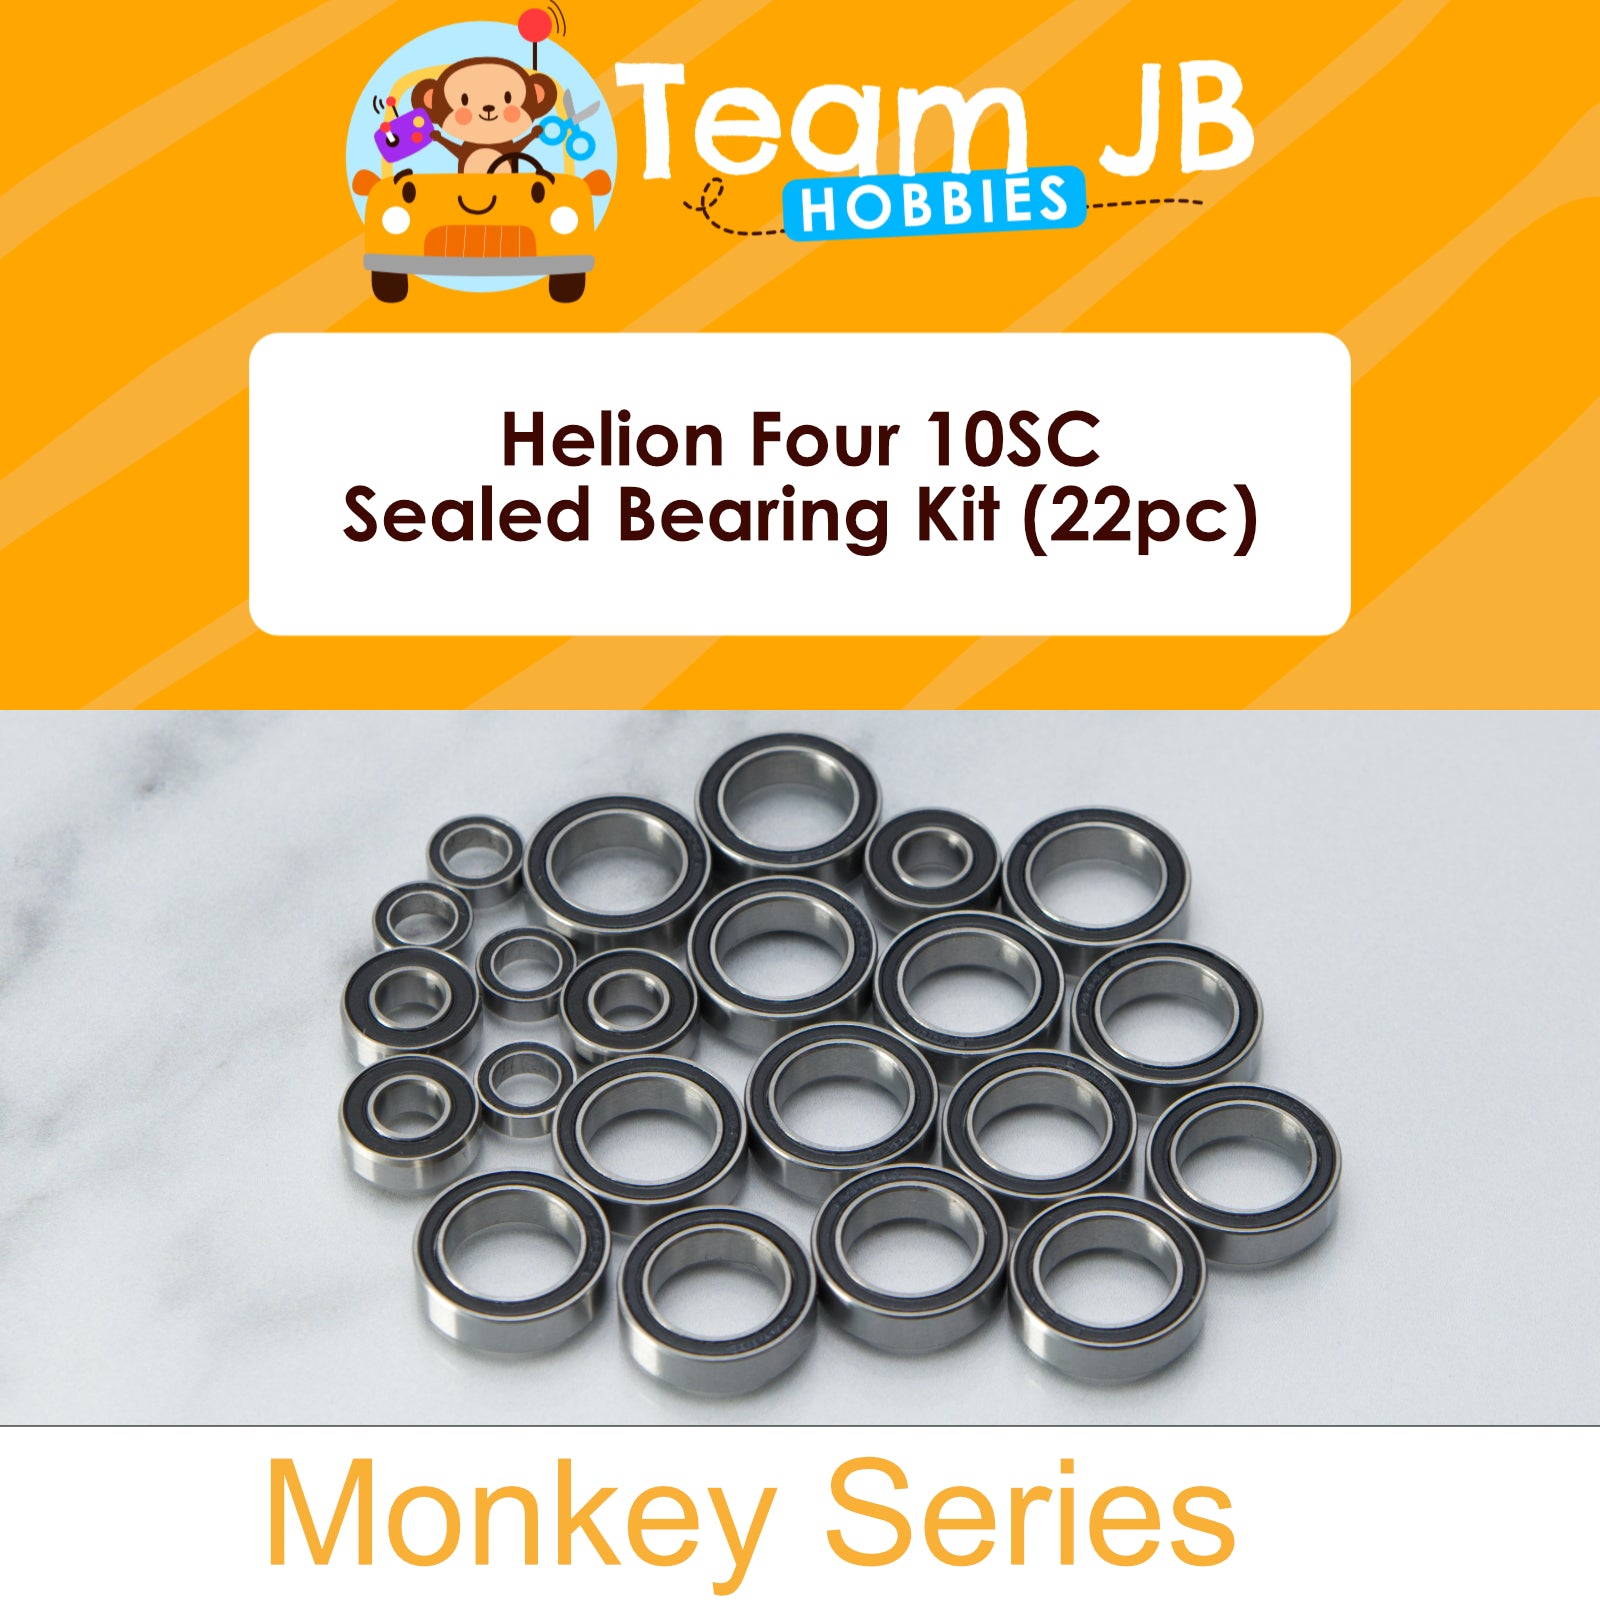 Helion Four 10SC - Sealed Bearing Kit